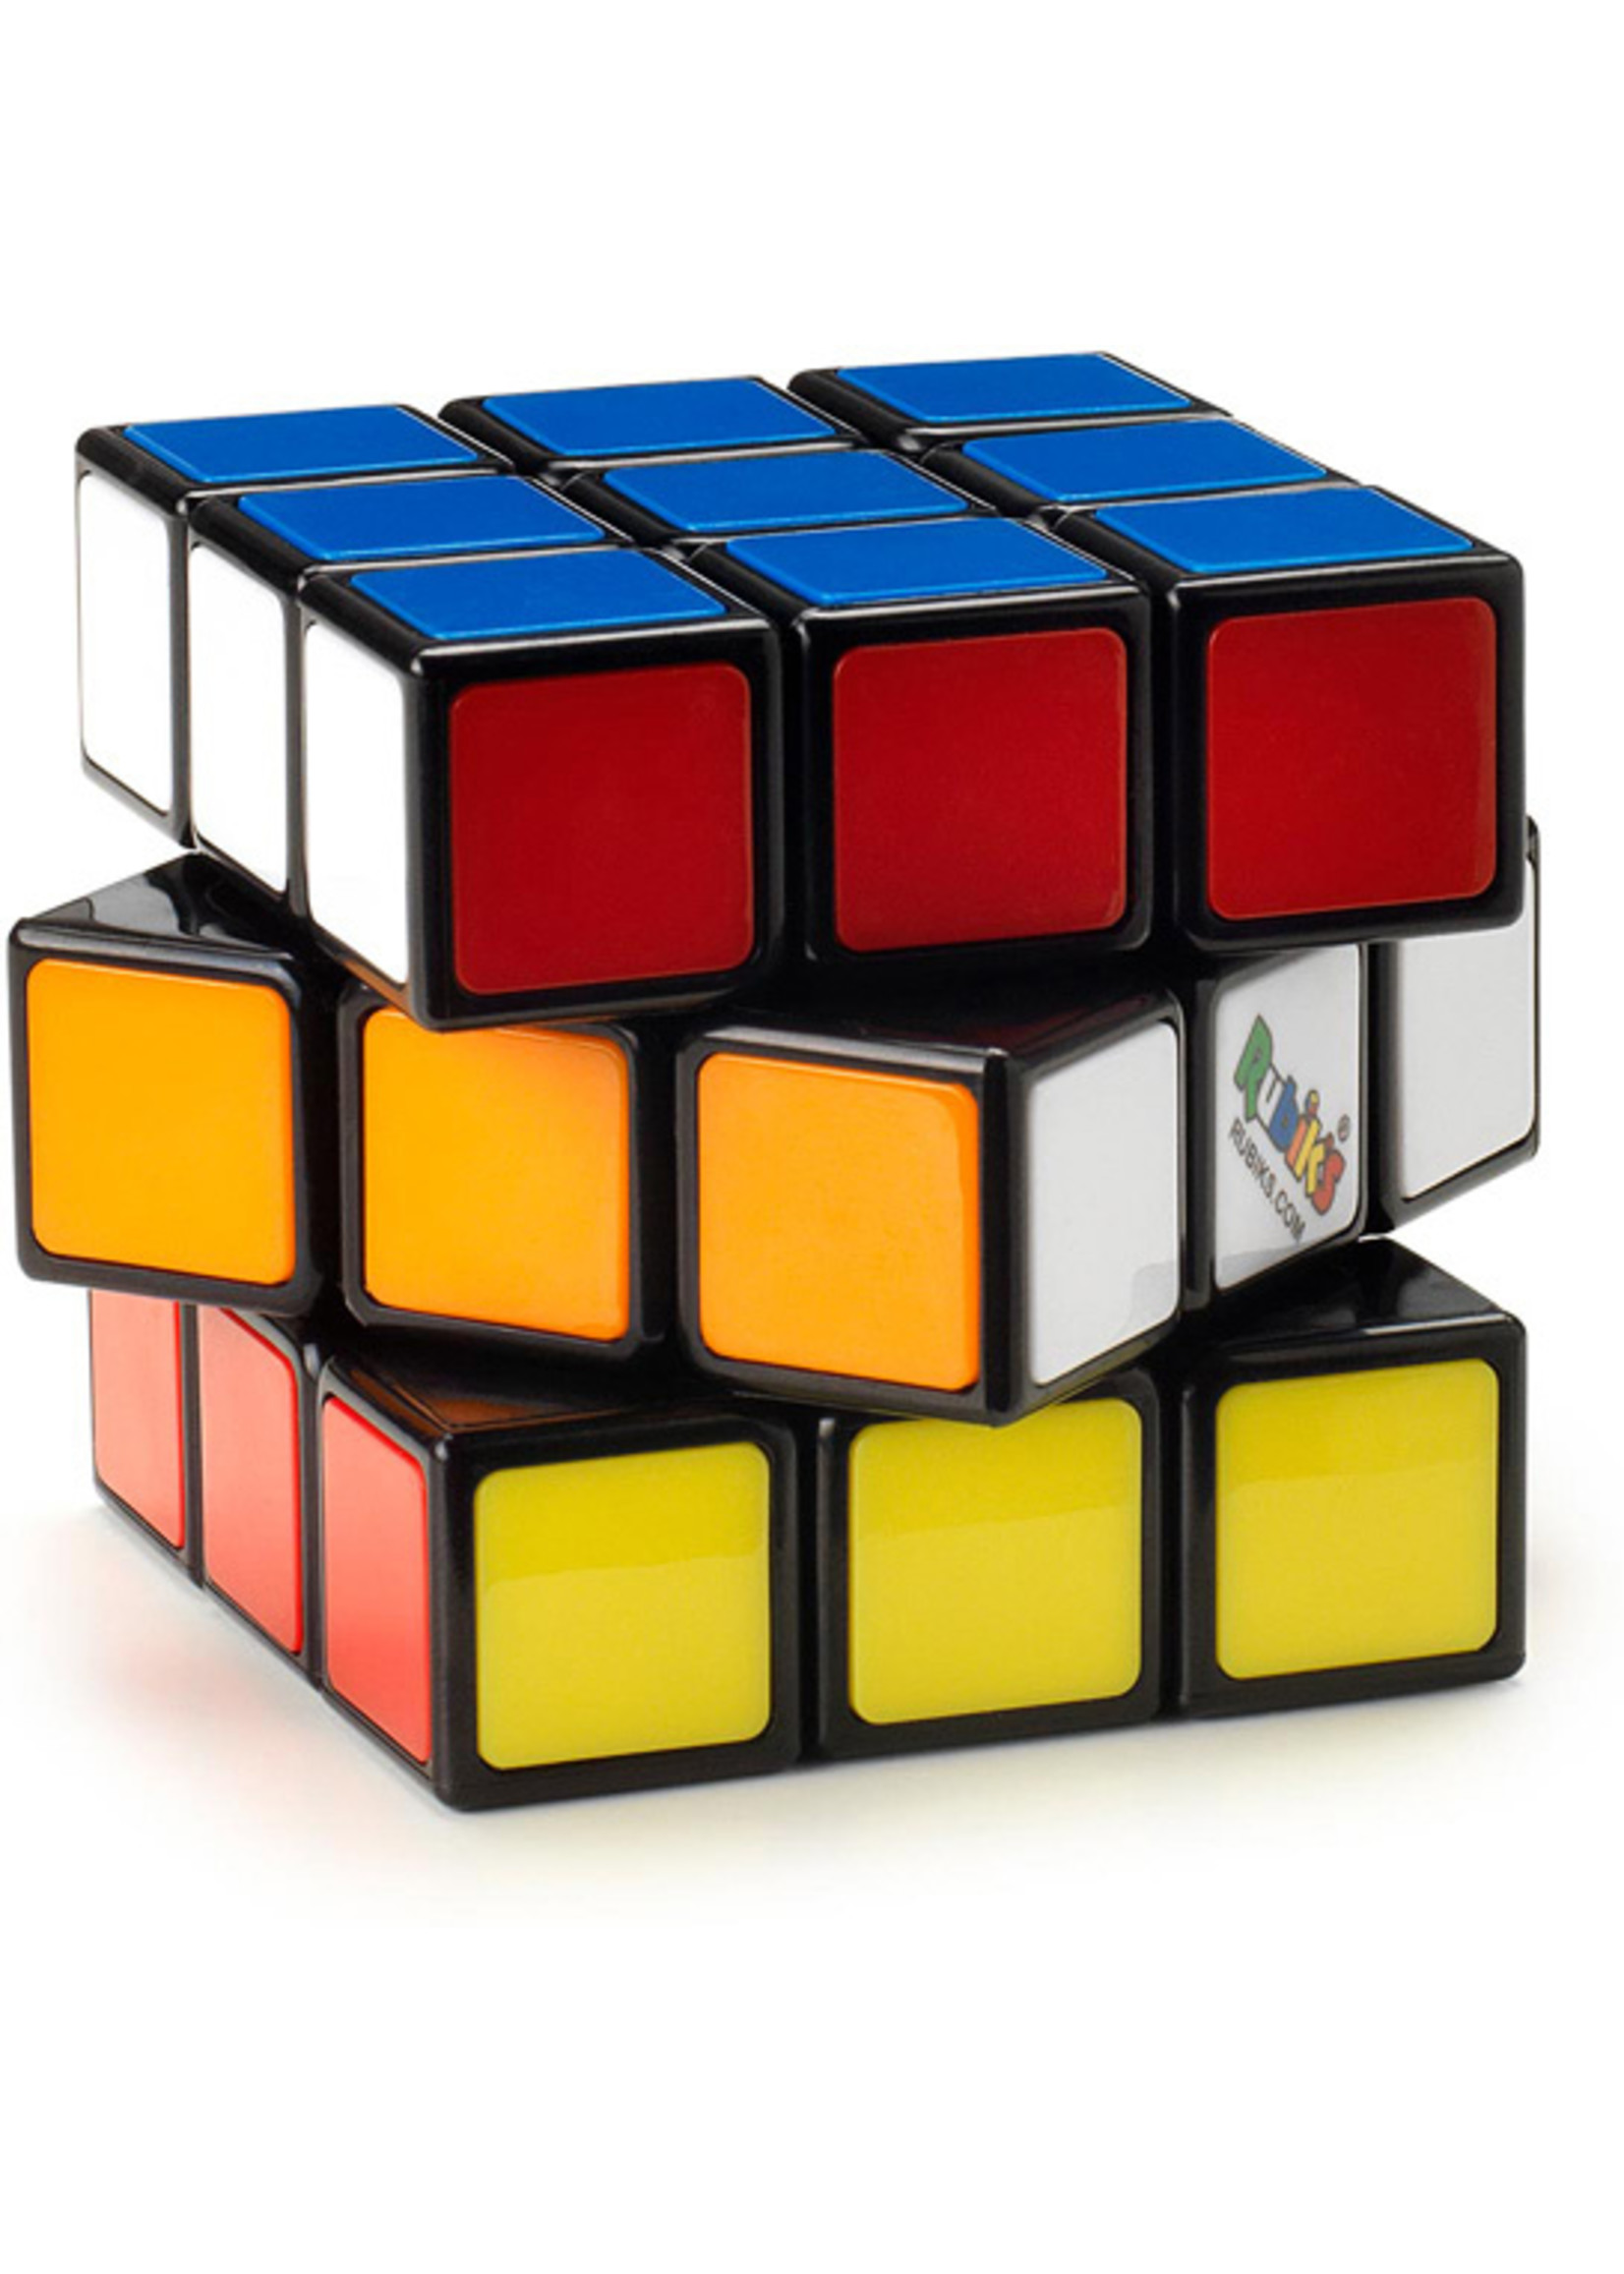 Rubik's Cube (3x3x3)  Rubiks cube, Rubix cube, Cube